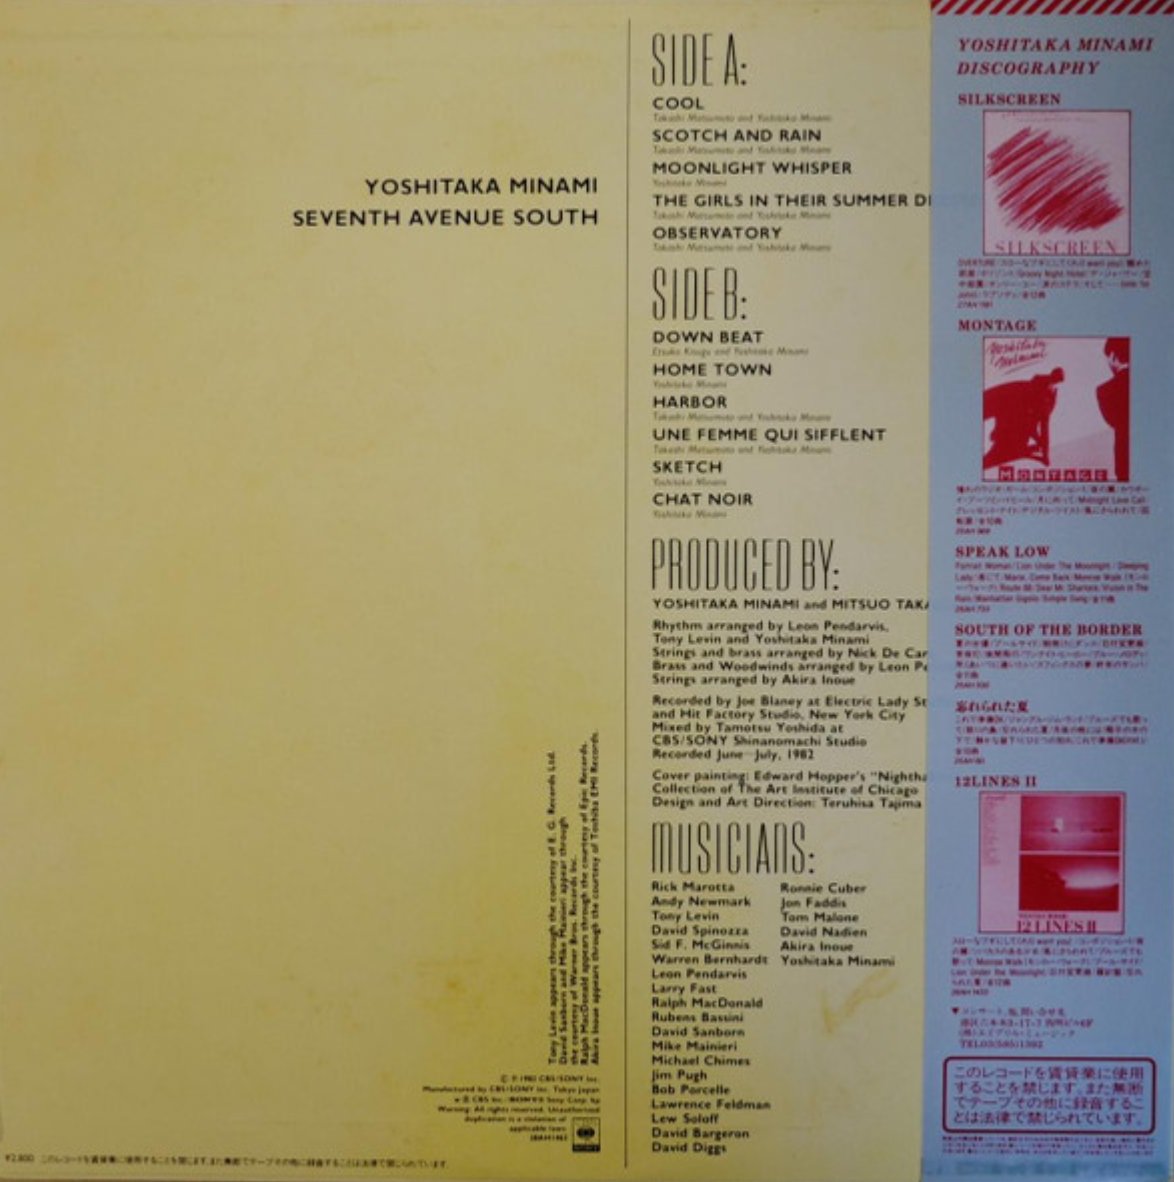 Yoshitaka Minami - Seventh Avenue South (Japan Import) - Inner Ocean Records